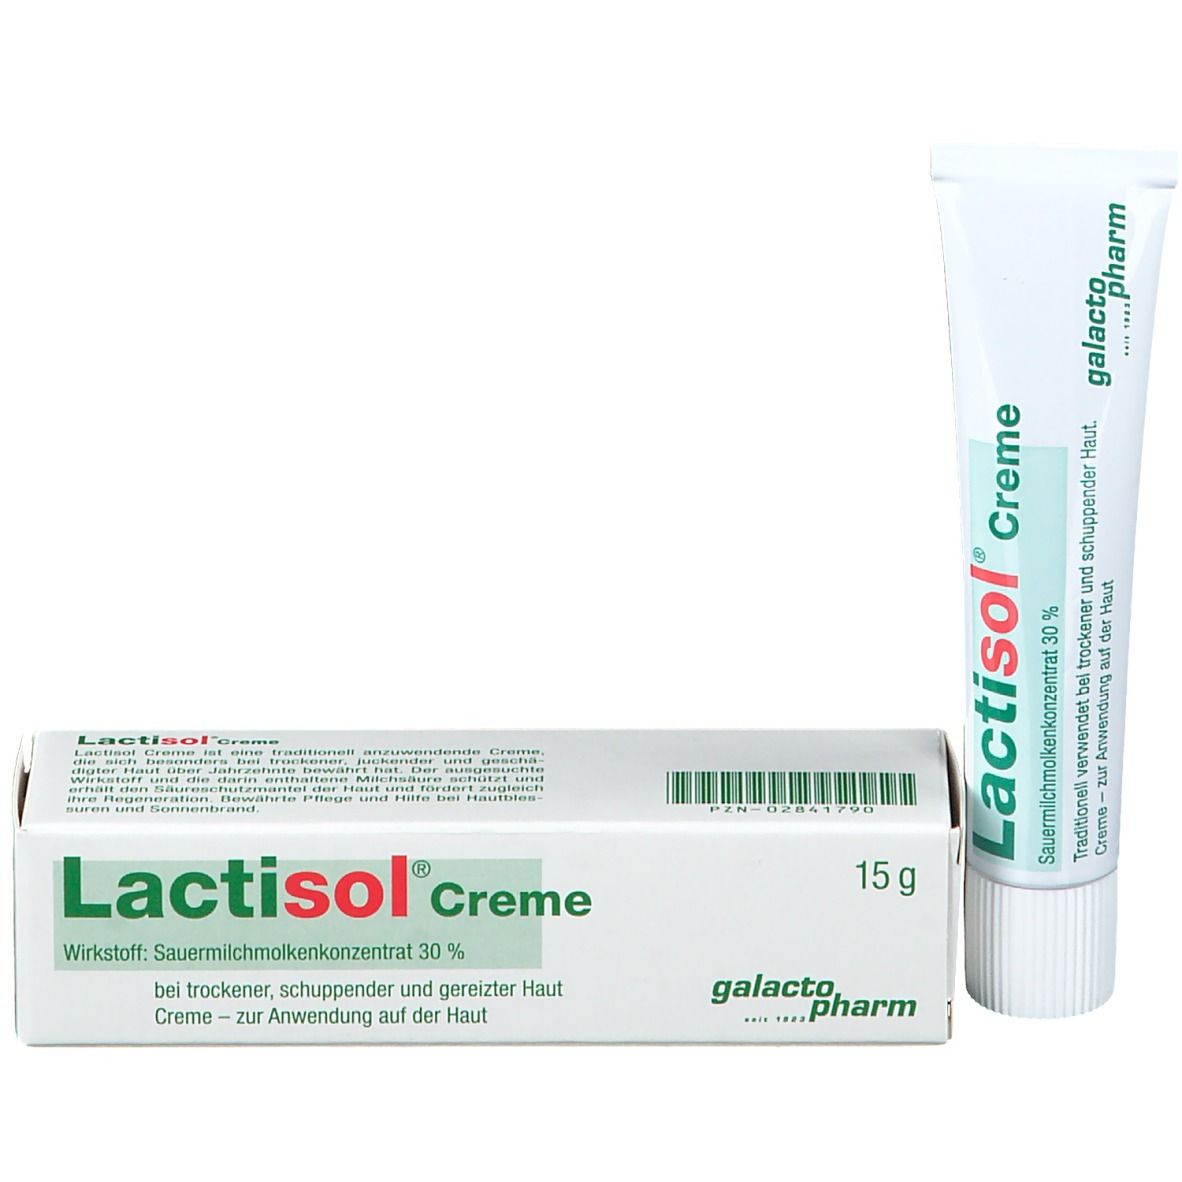 Lactisol Creme